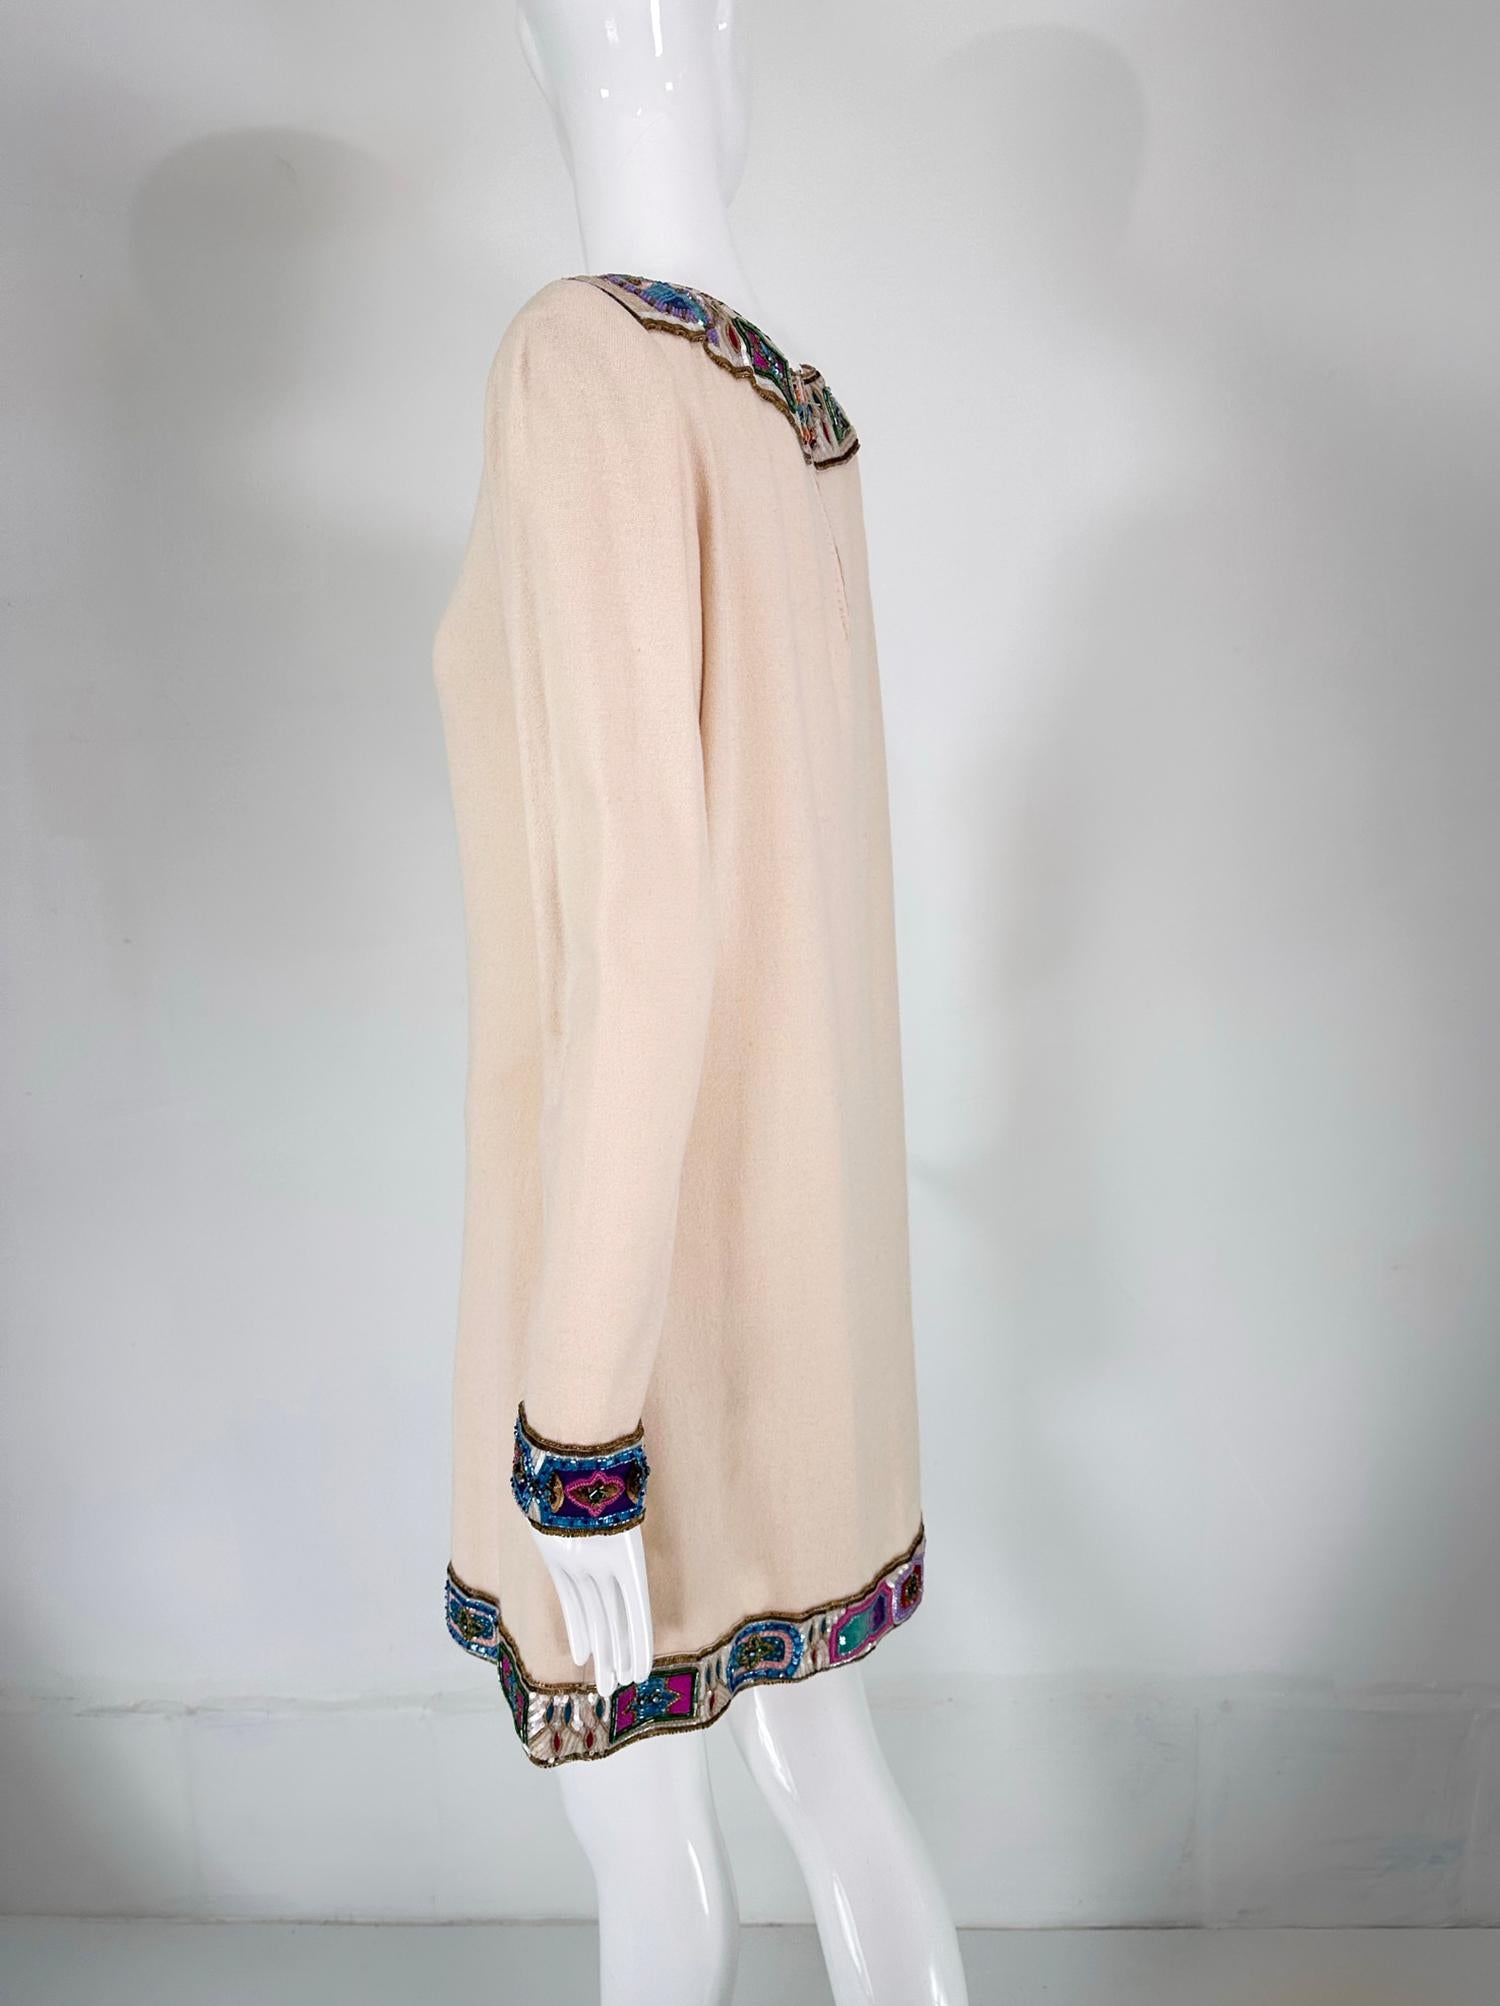 Women's Mary McFadden Cream Cashmere Knit with Unique Sequin Trim Tunic Dress 1970s 12 For Sale